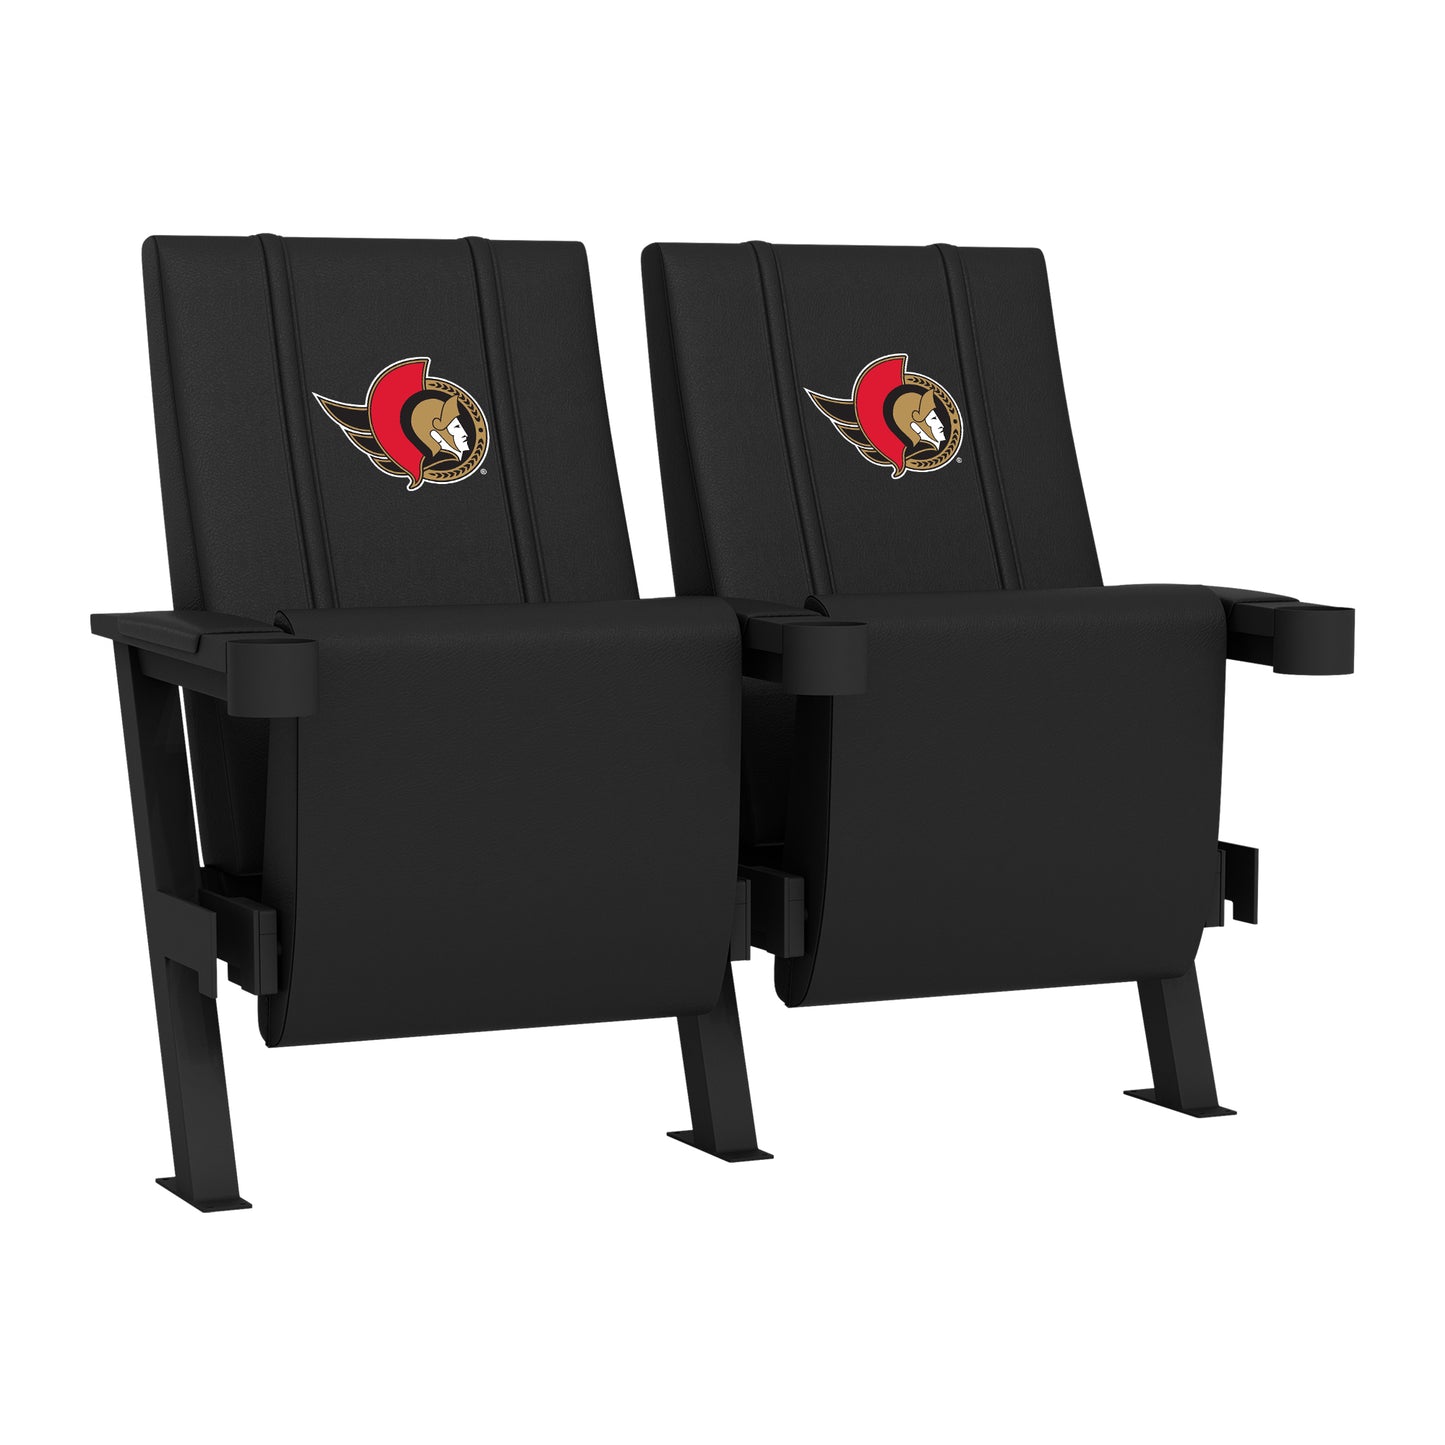 SuiteMax 3.5 VIP Seats with Ottawa Senators Primary Logo